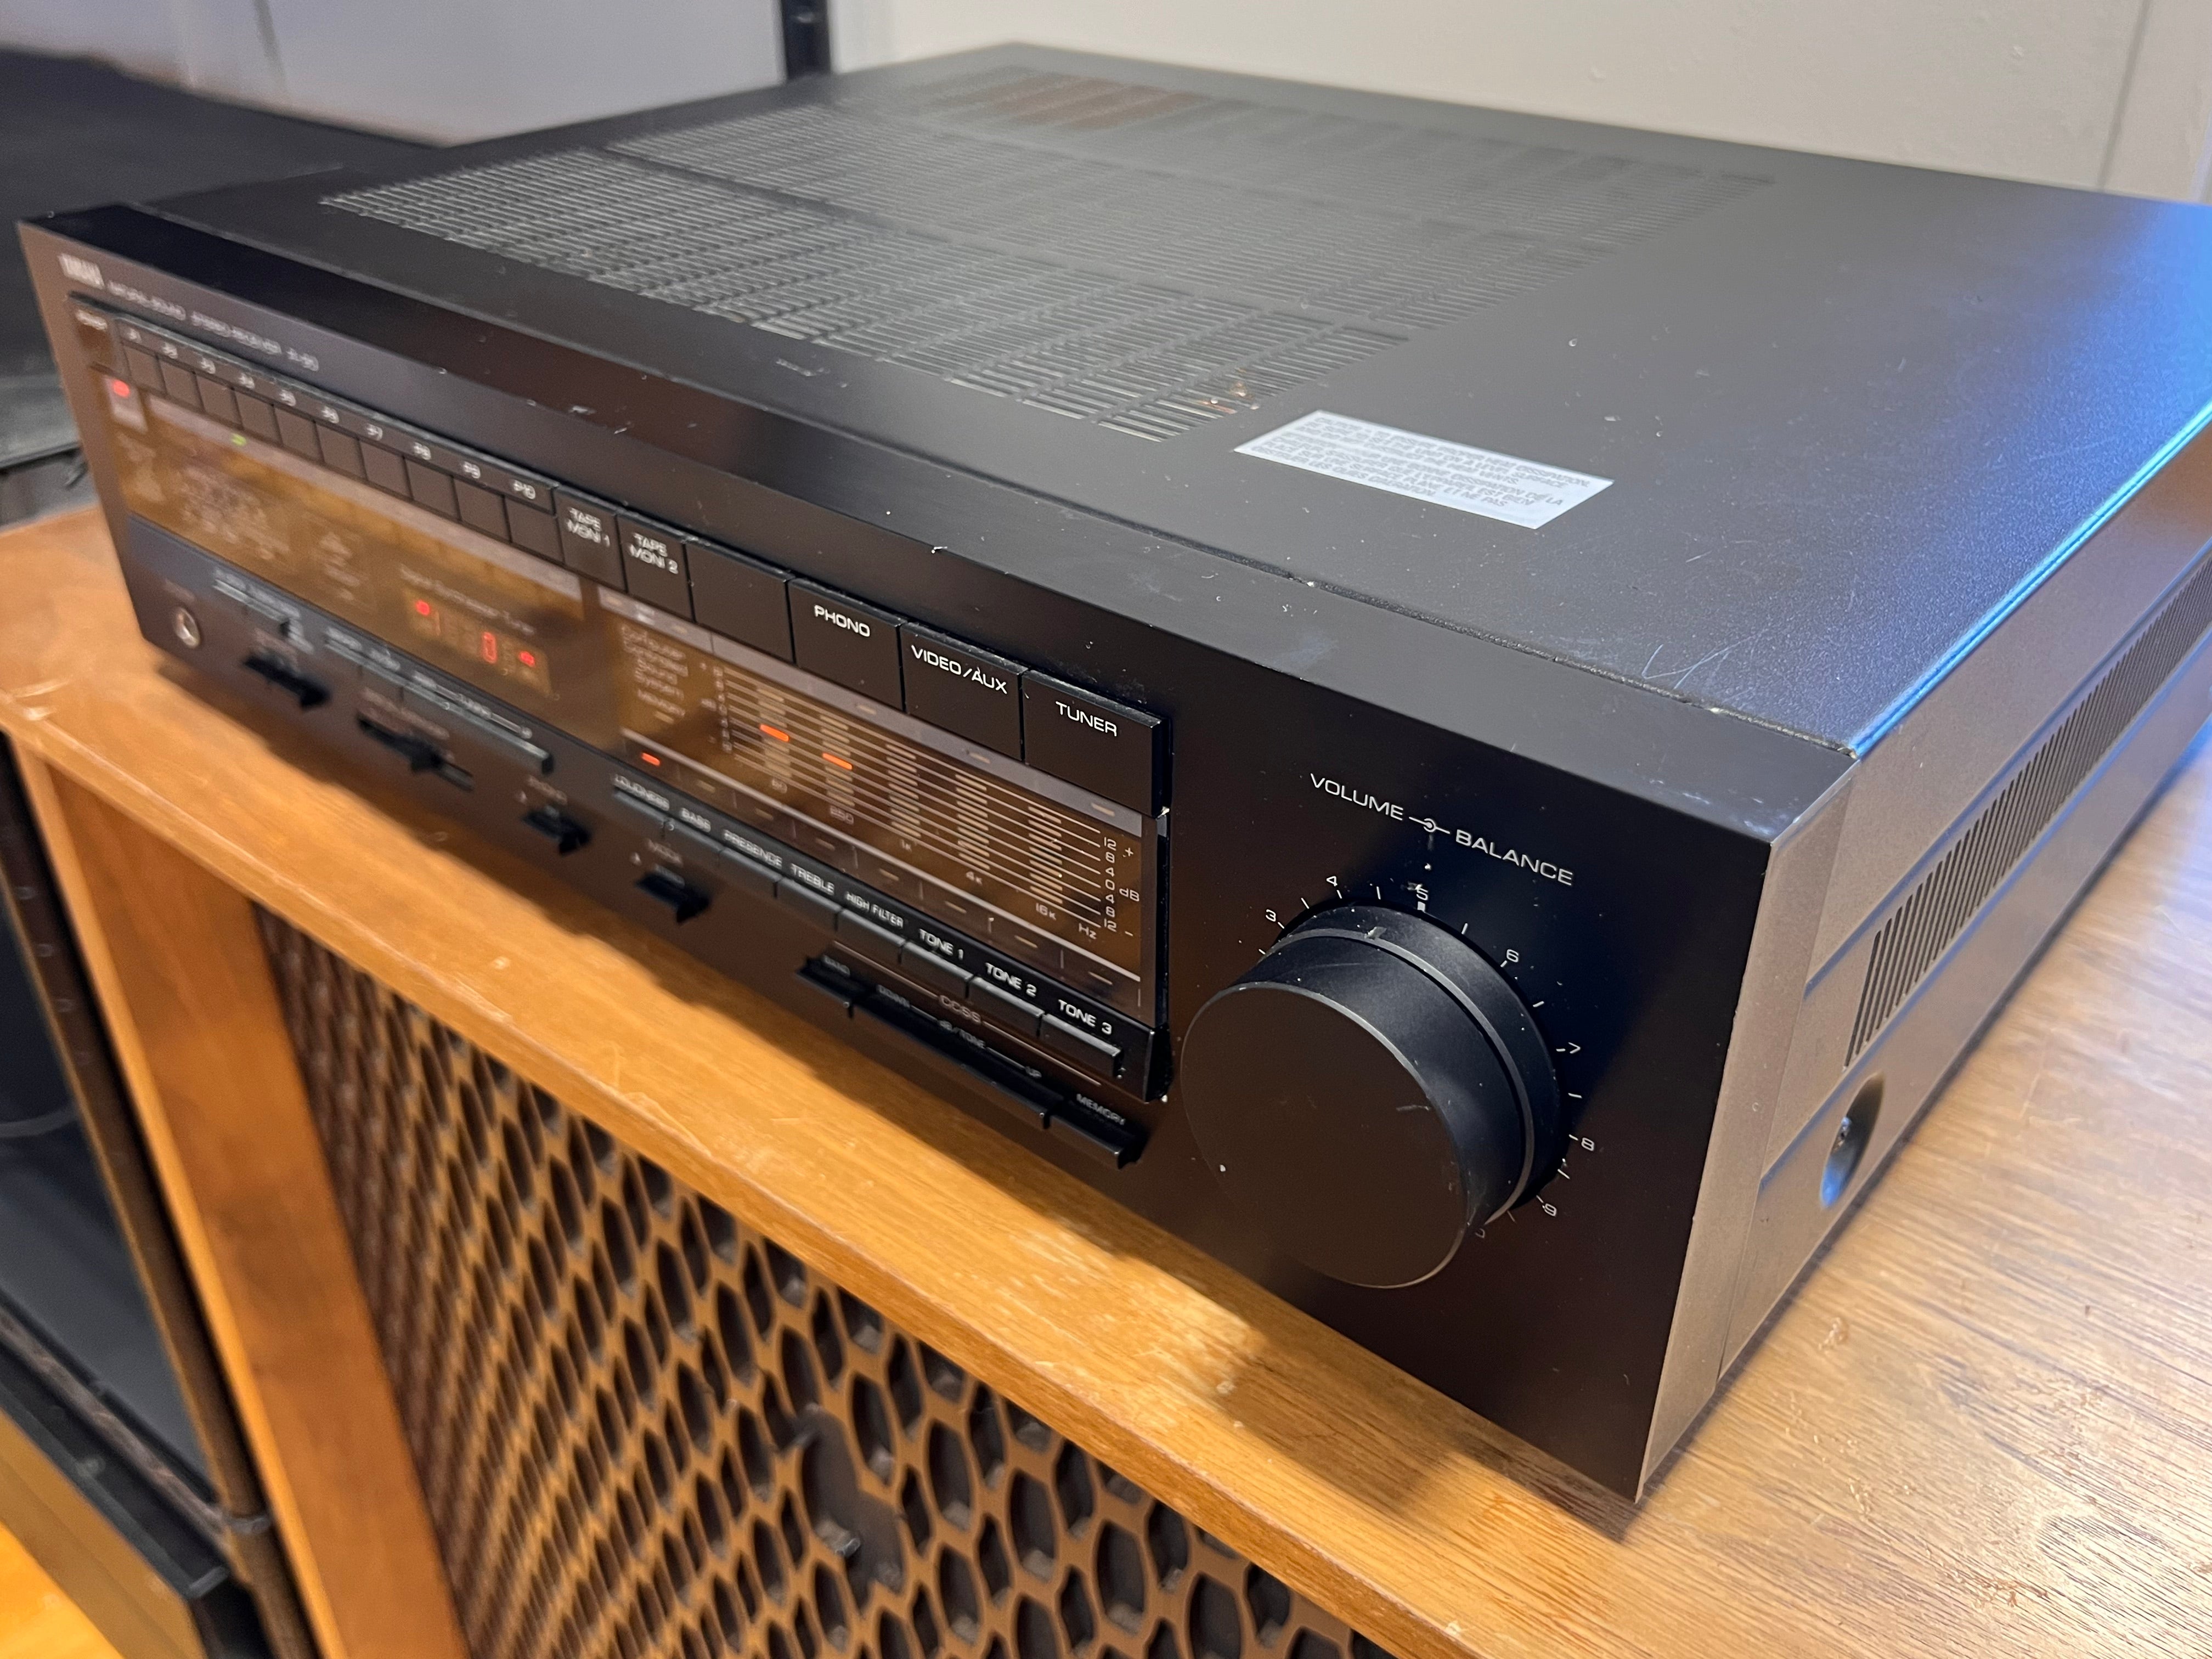 Yamaha R-90 Stereo Receiver, 80s "Digital" Control Center